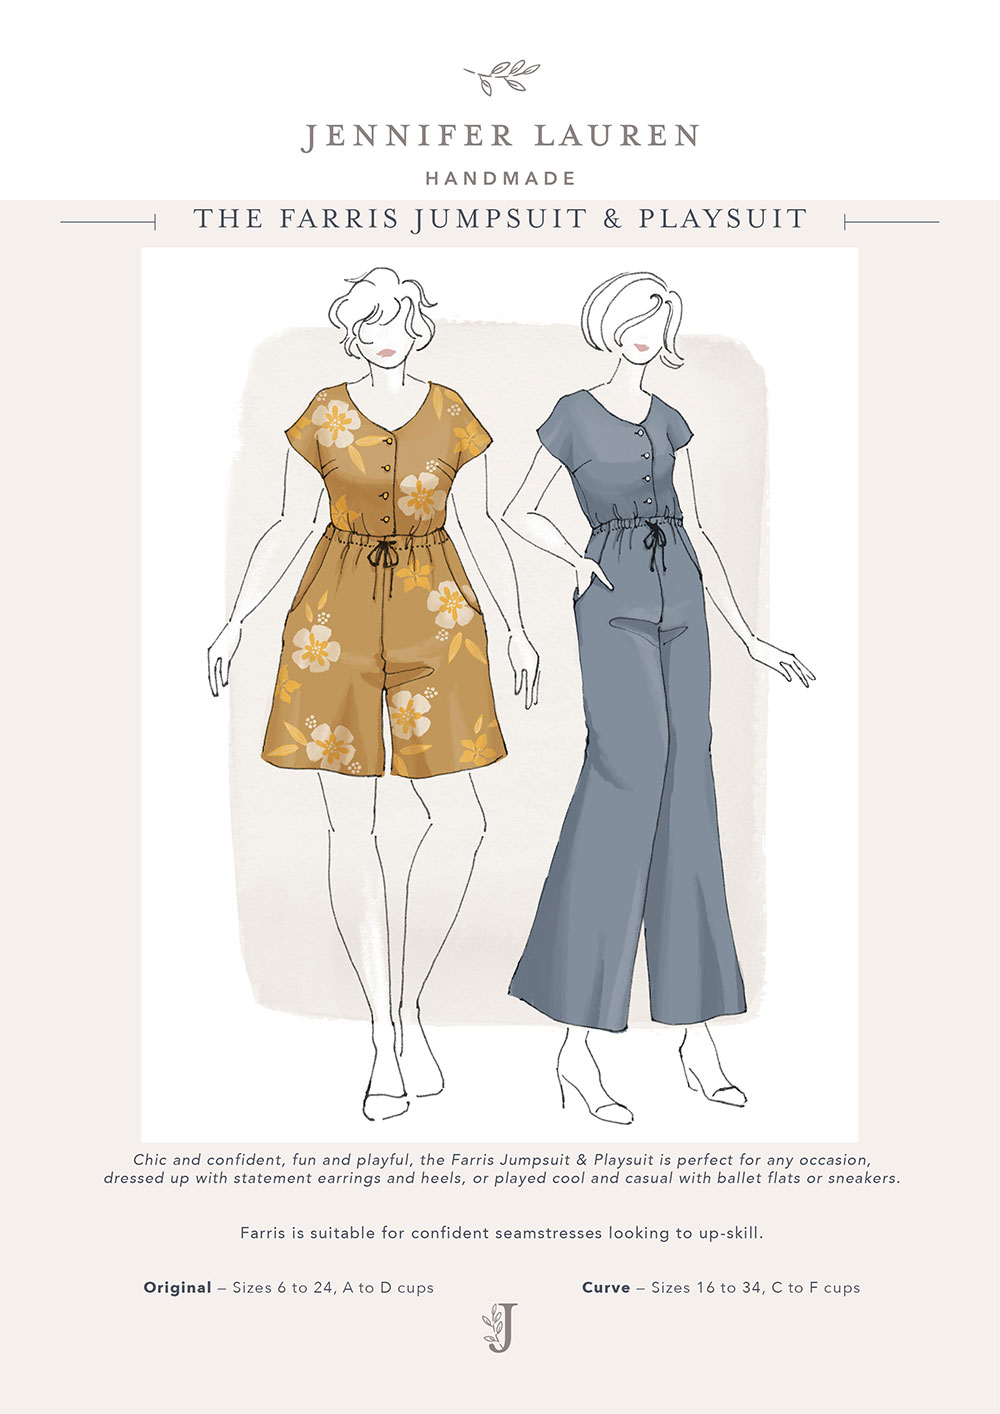 The Farris Jumpsuit & Playsuit – Jennifer Lauren Handmade